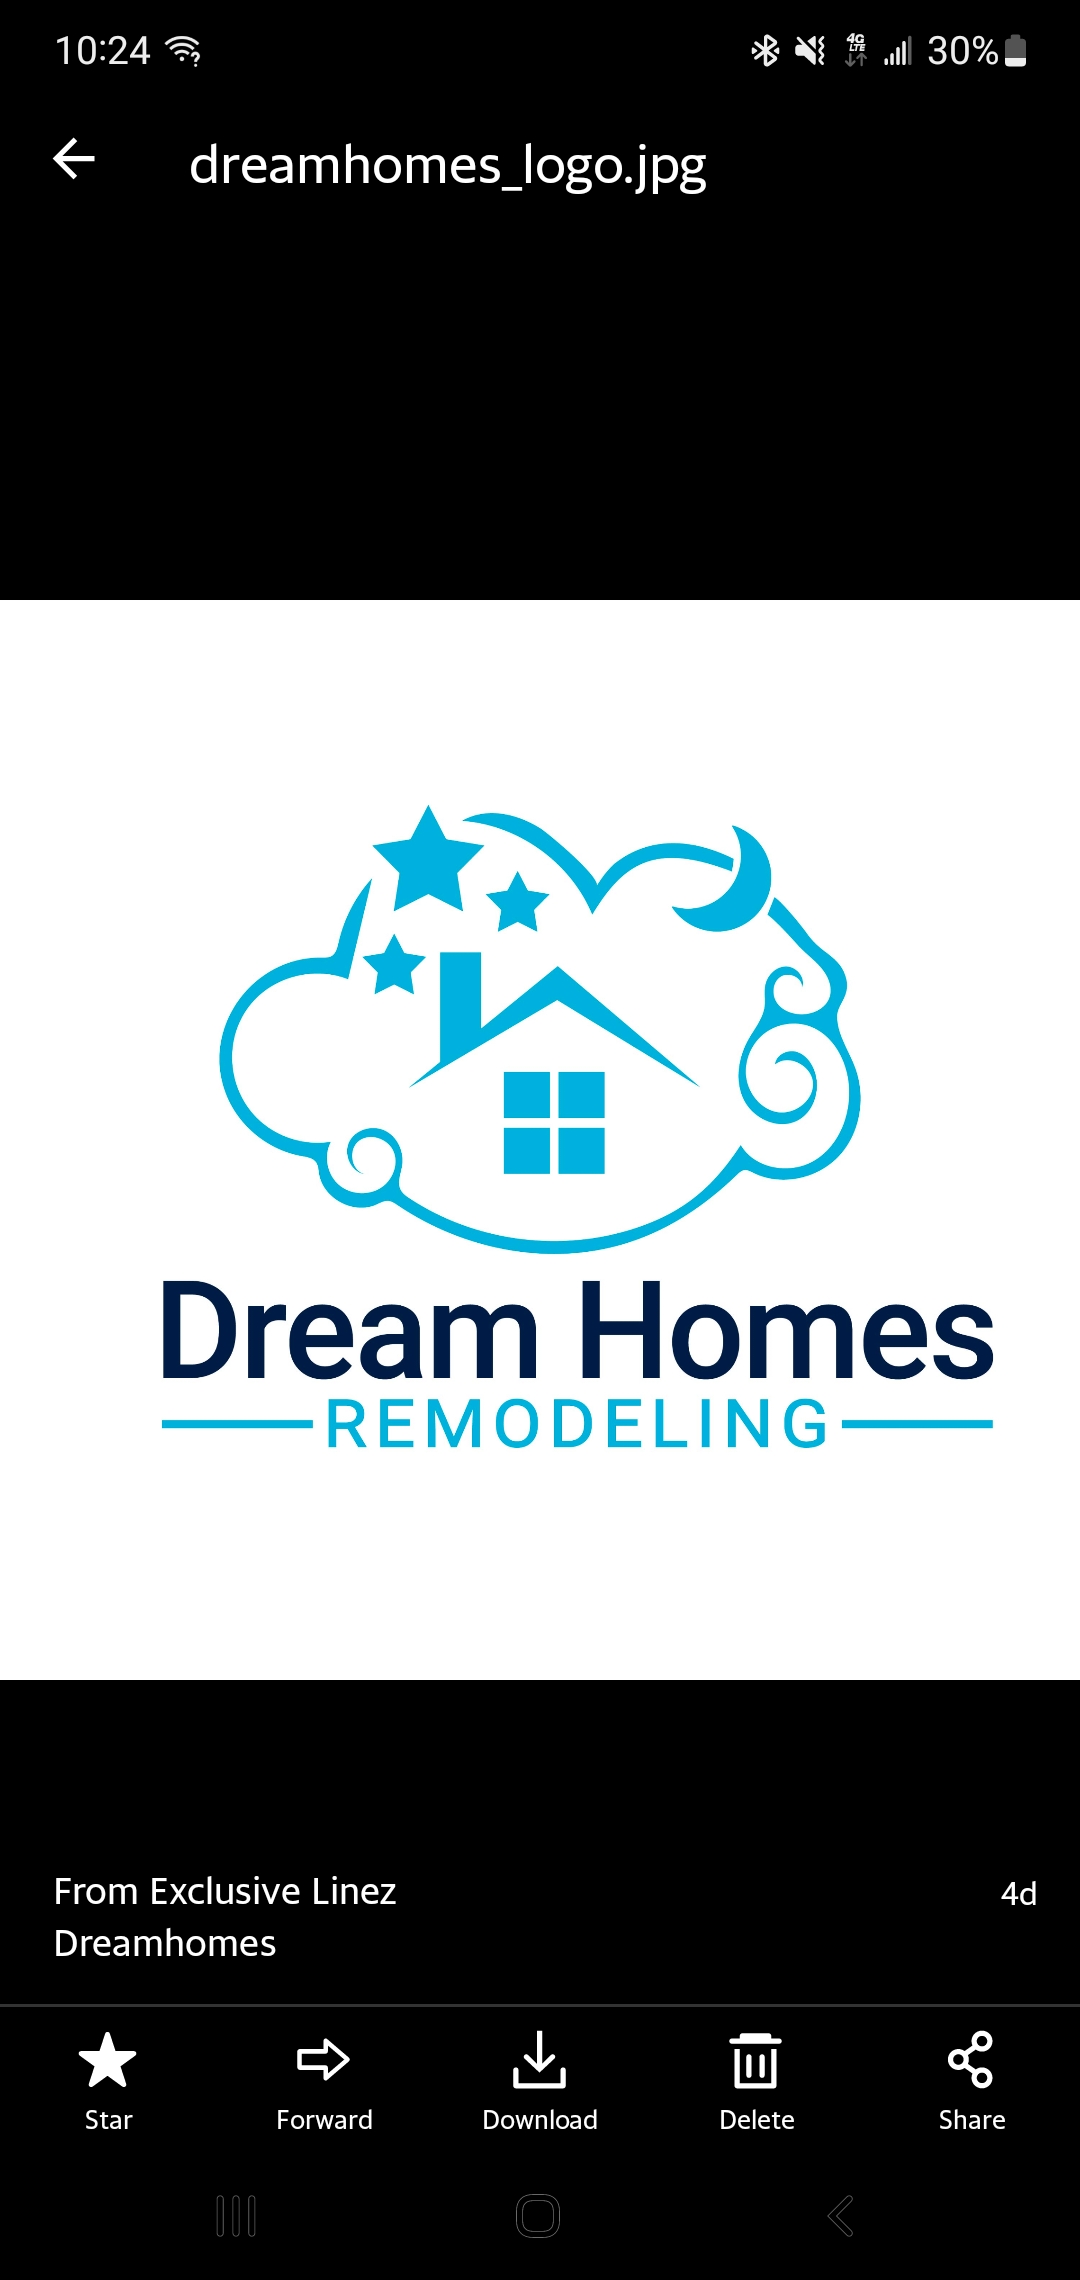 Dream Homes Remodeling LLC Logo